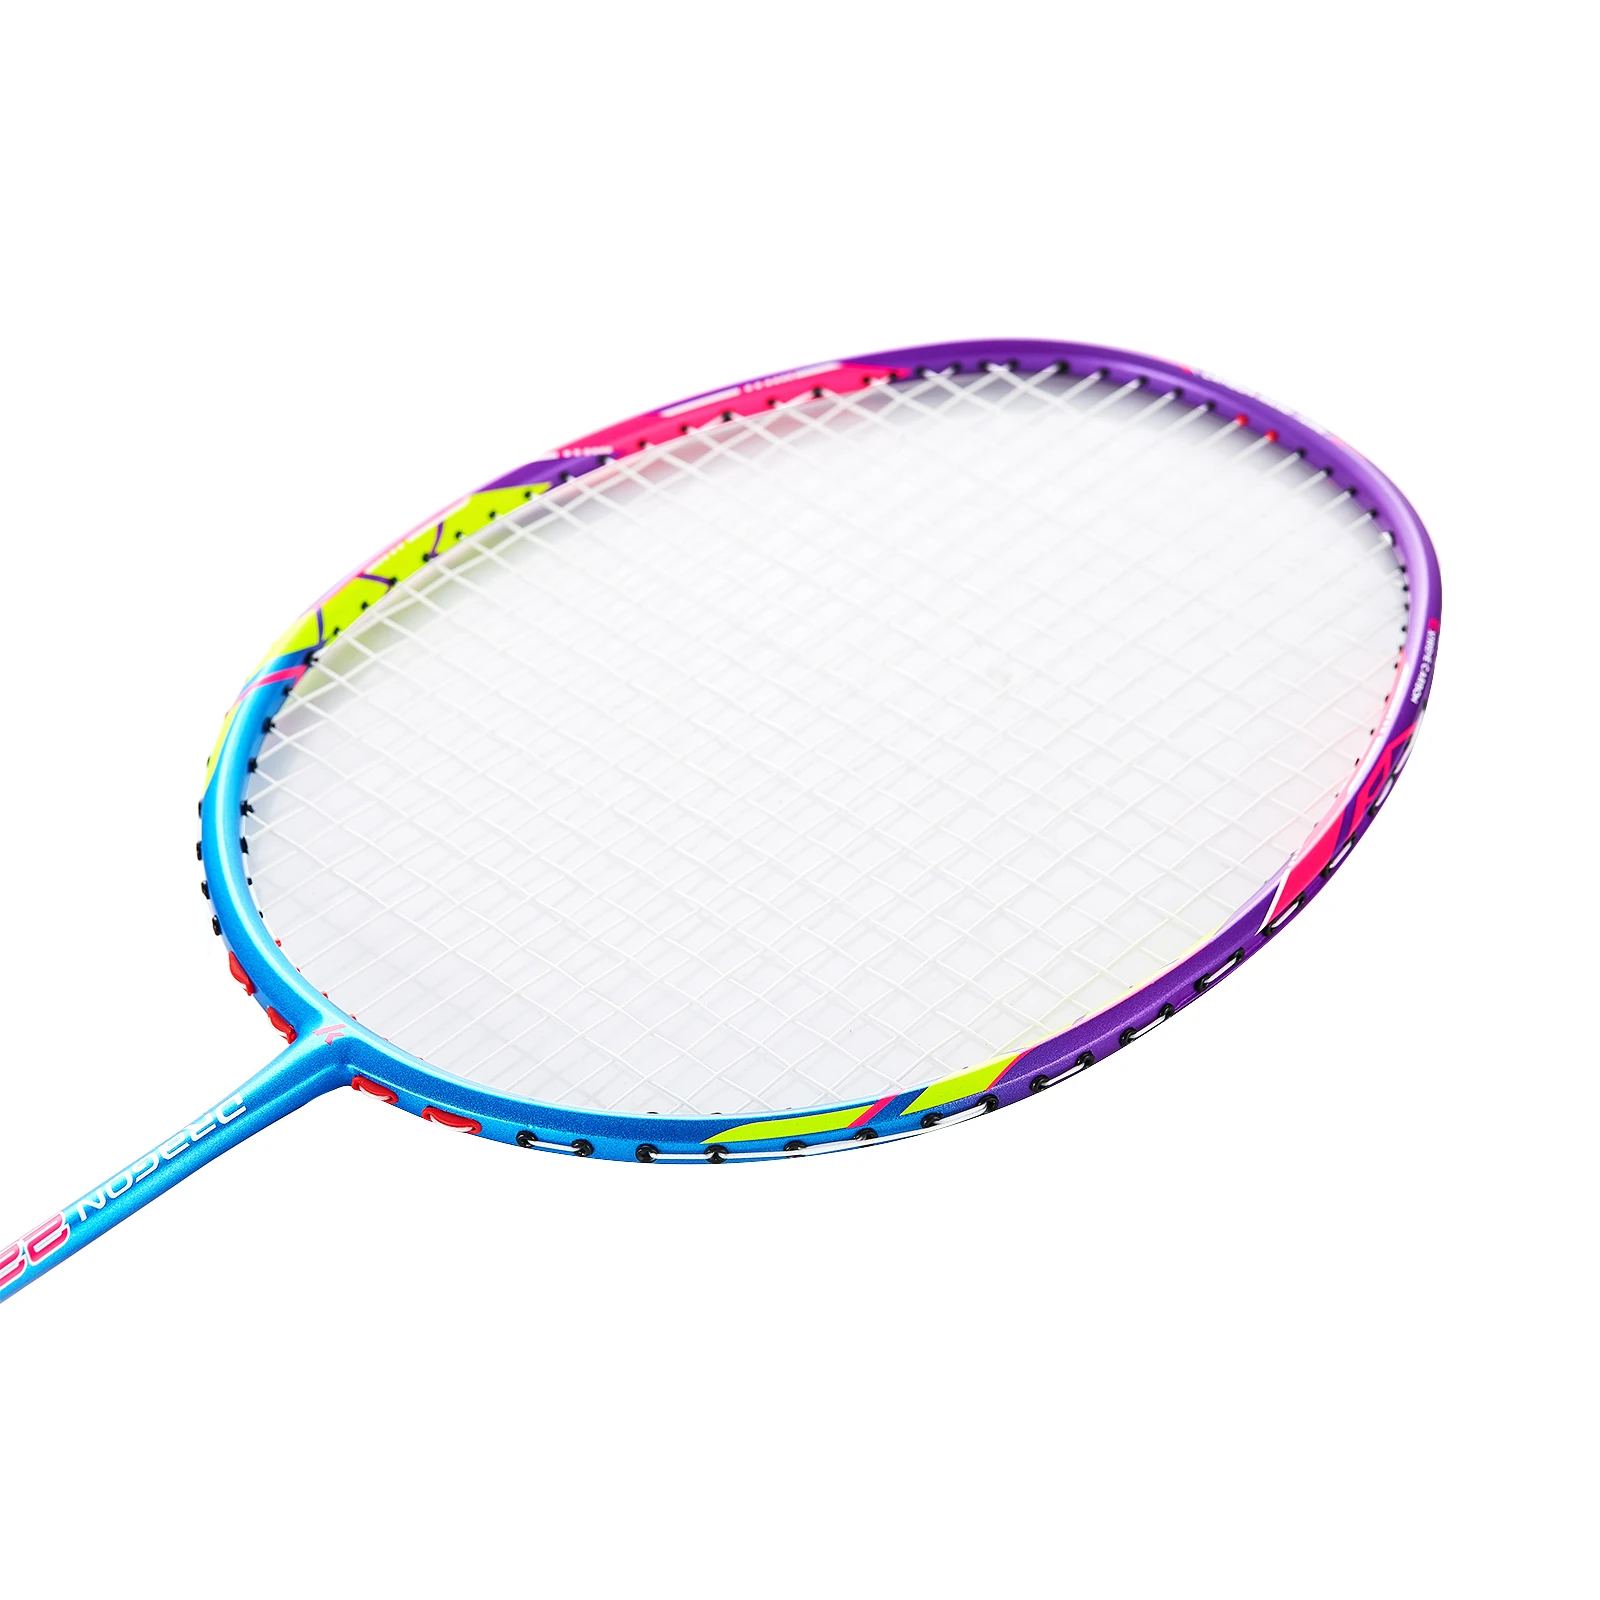 kawasaki badminton racket price